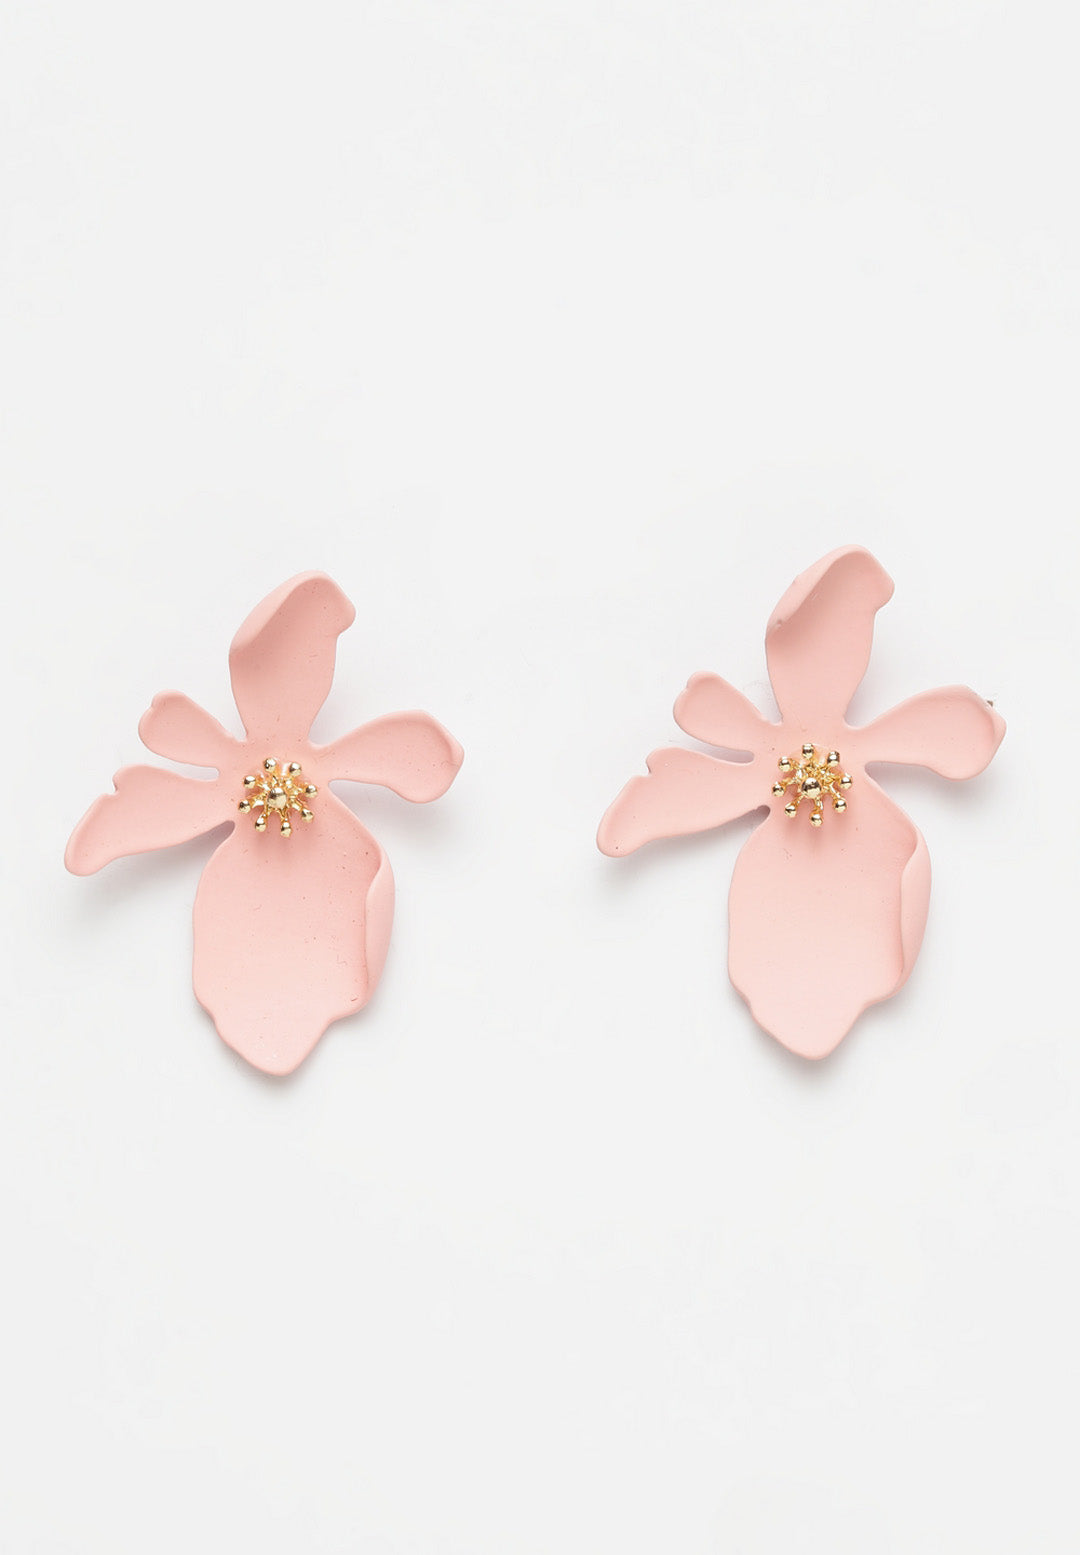 Avant-Garde Paris Beautifully Crafted Acrylic Floral Earrings